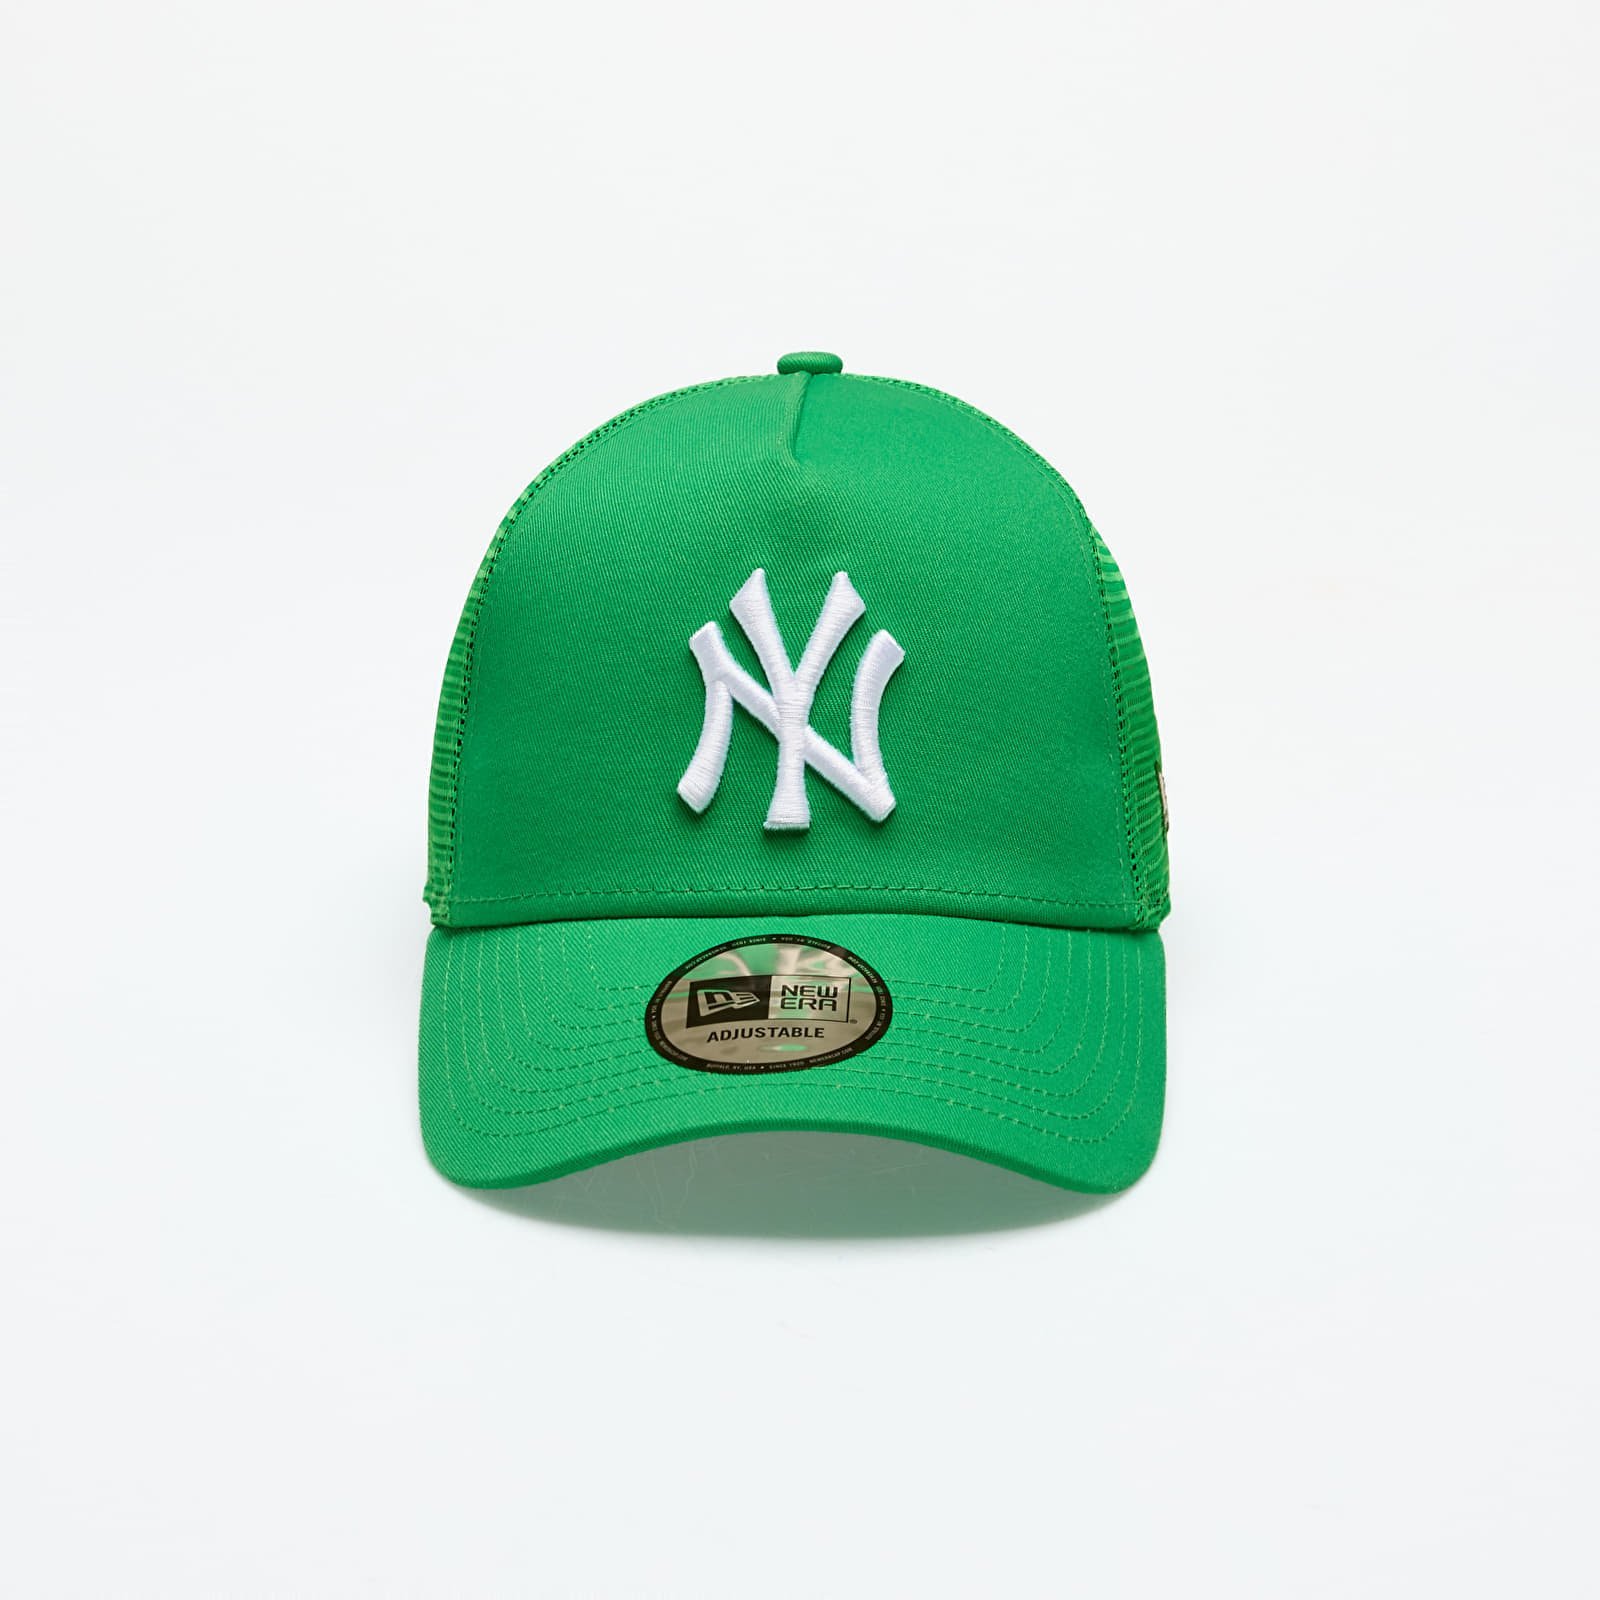 Cap New York Yankees 9Forty Snapback Green/ White